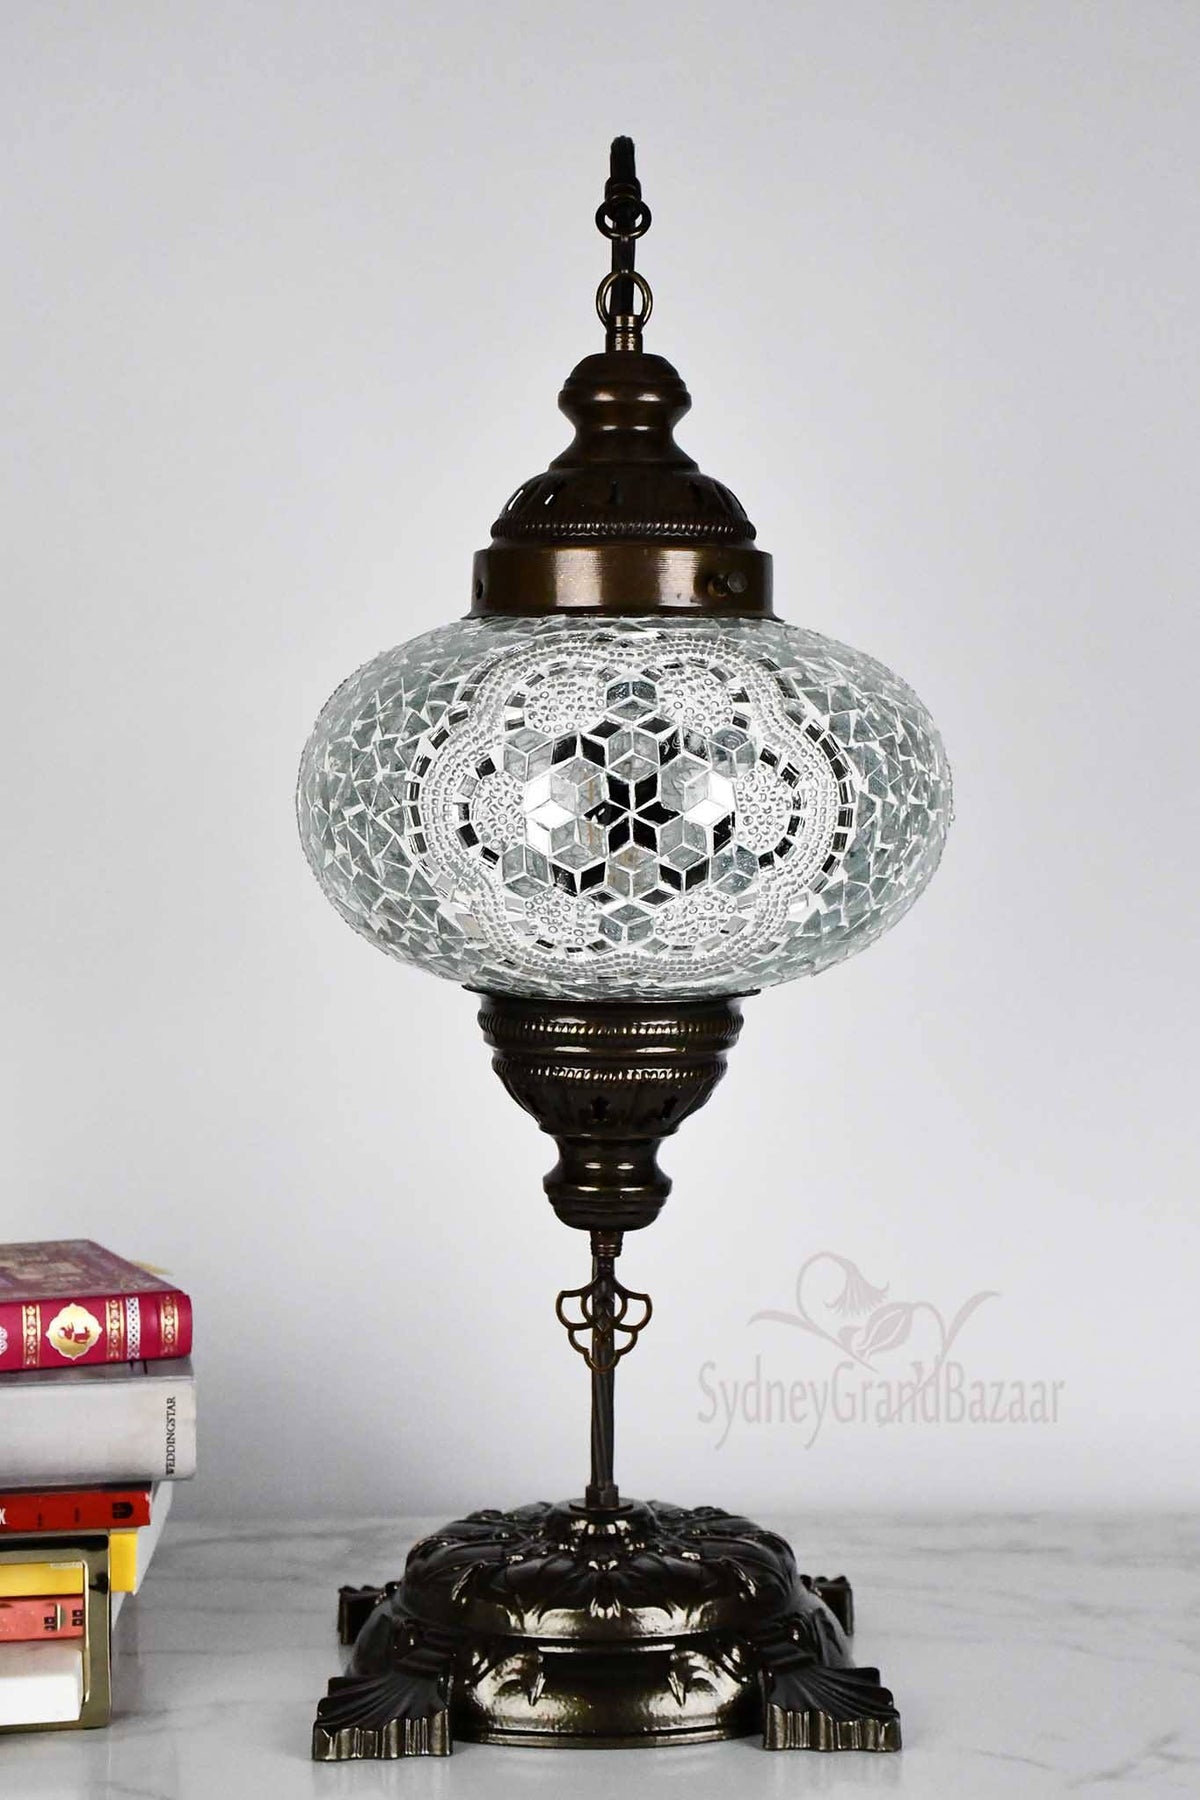 Turkish Lamp Large Clear White Flower Design Lighting Sydney Grand Bazaar 